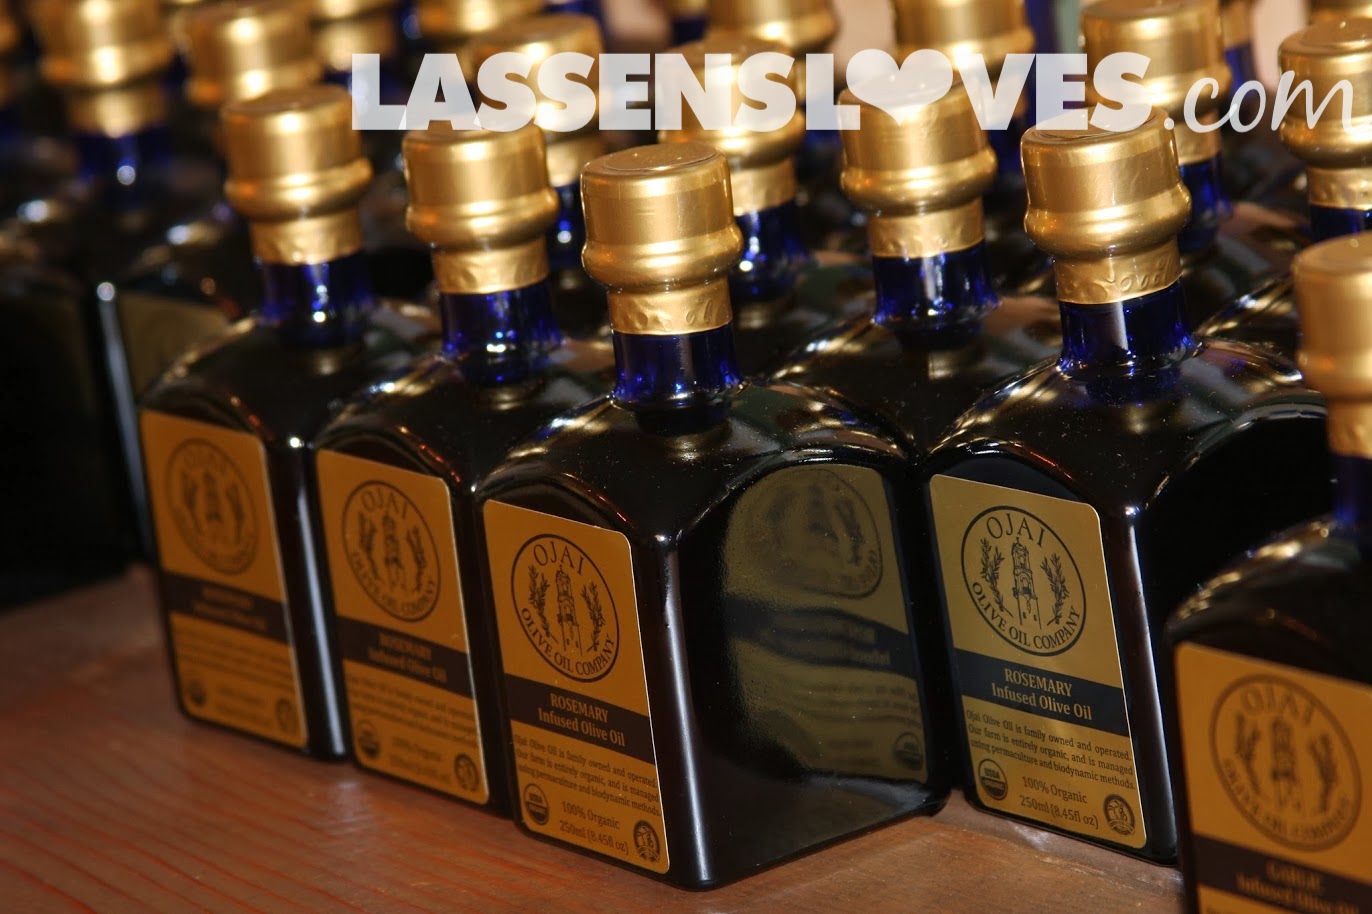 lassensloves.com, Lassen's, Lassens, Ojai+Olive+Oil, Olive+Oil 